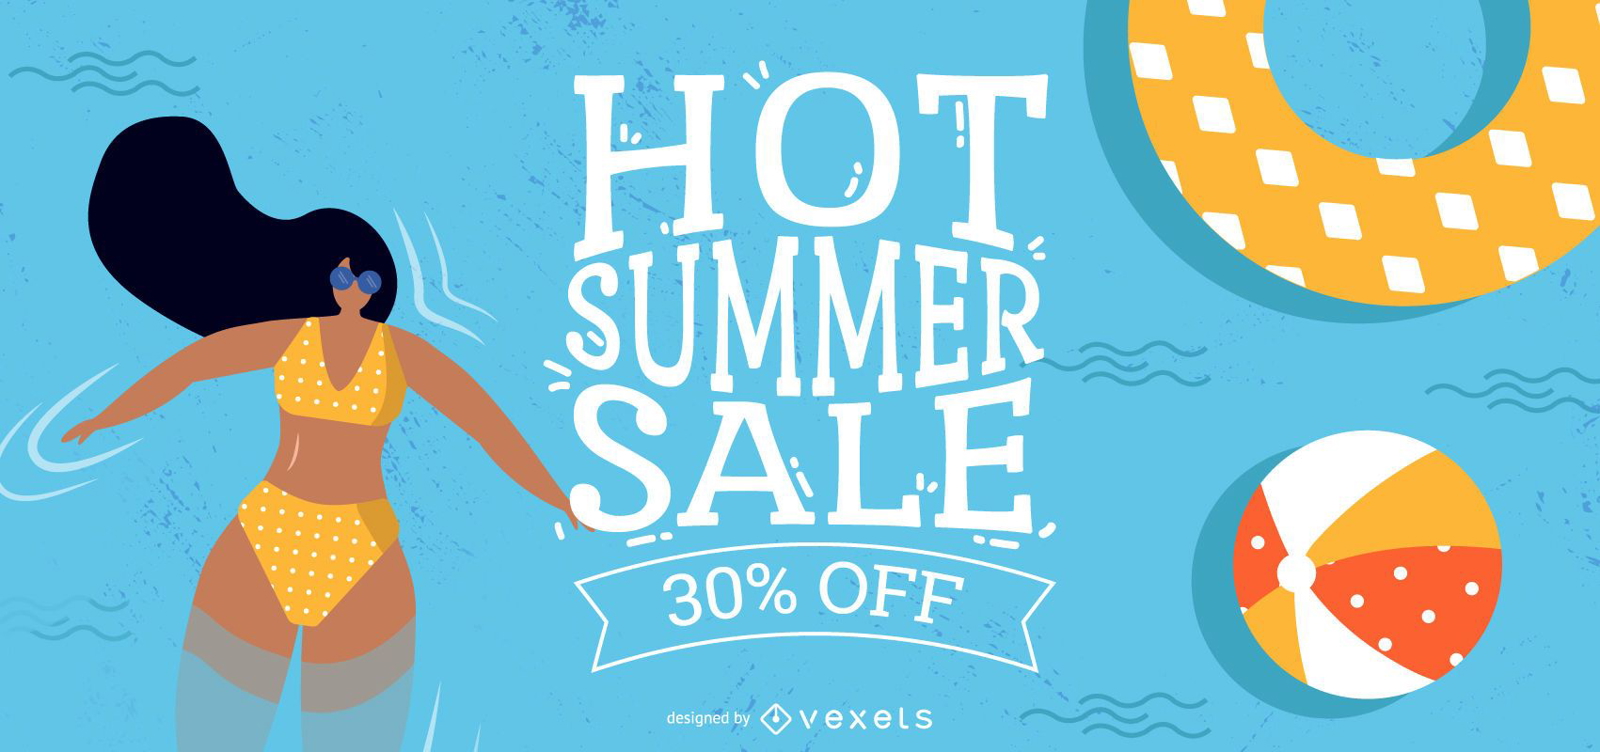 Hot Summer Sale Design 